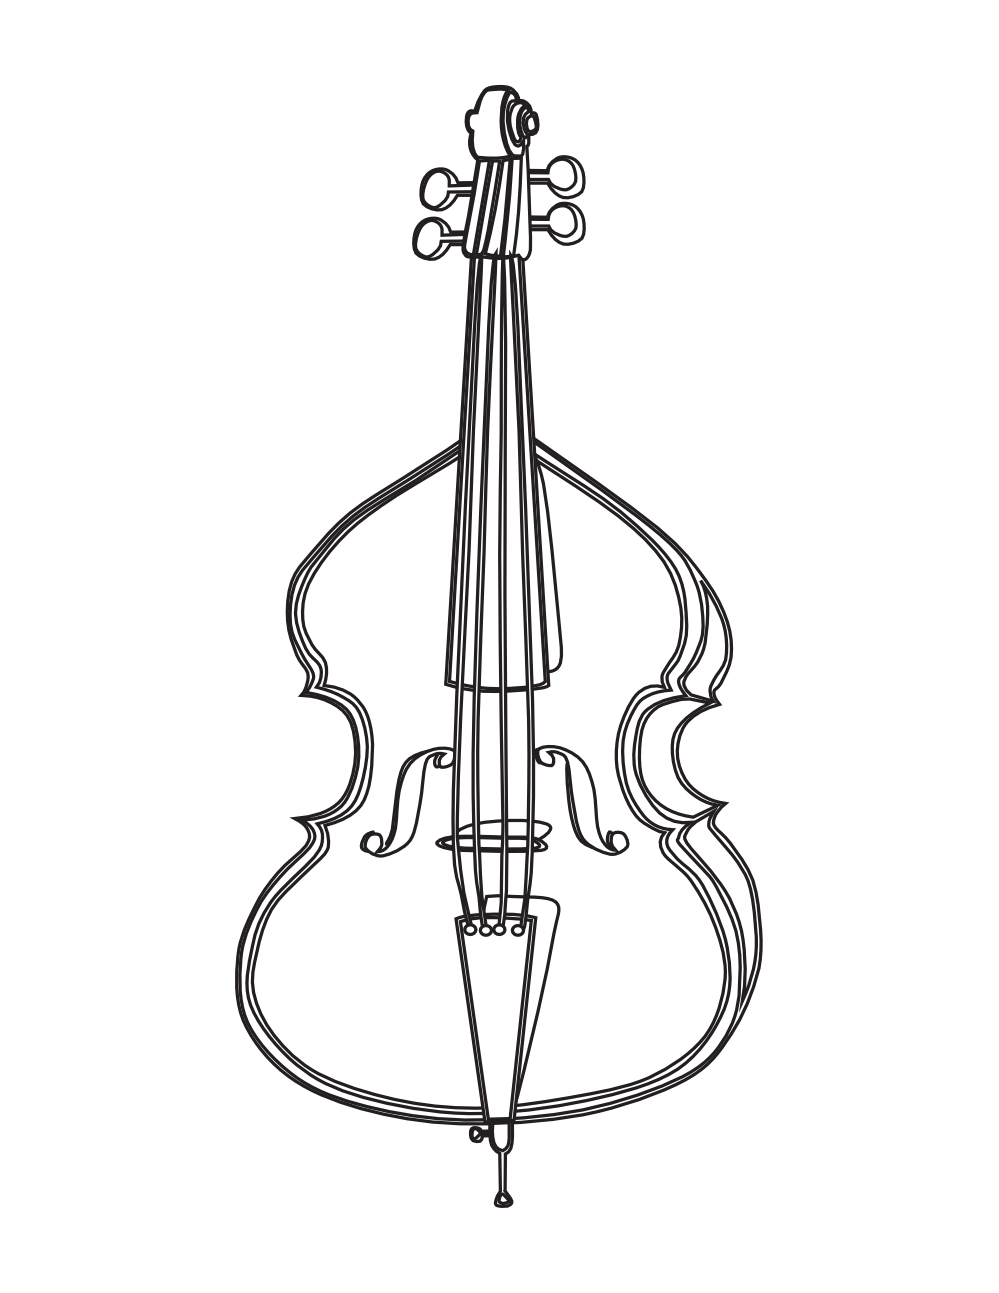 Instruments clipart string instrument, Instruments string